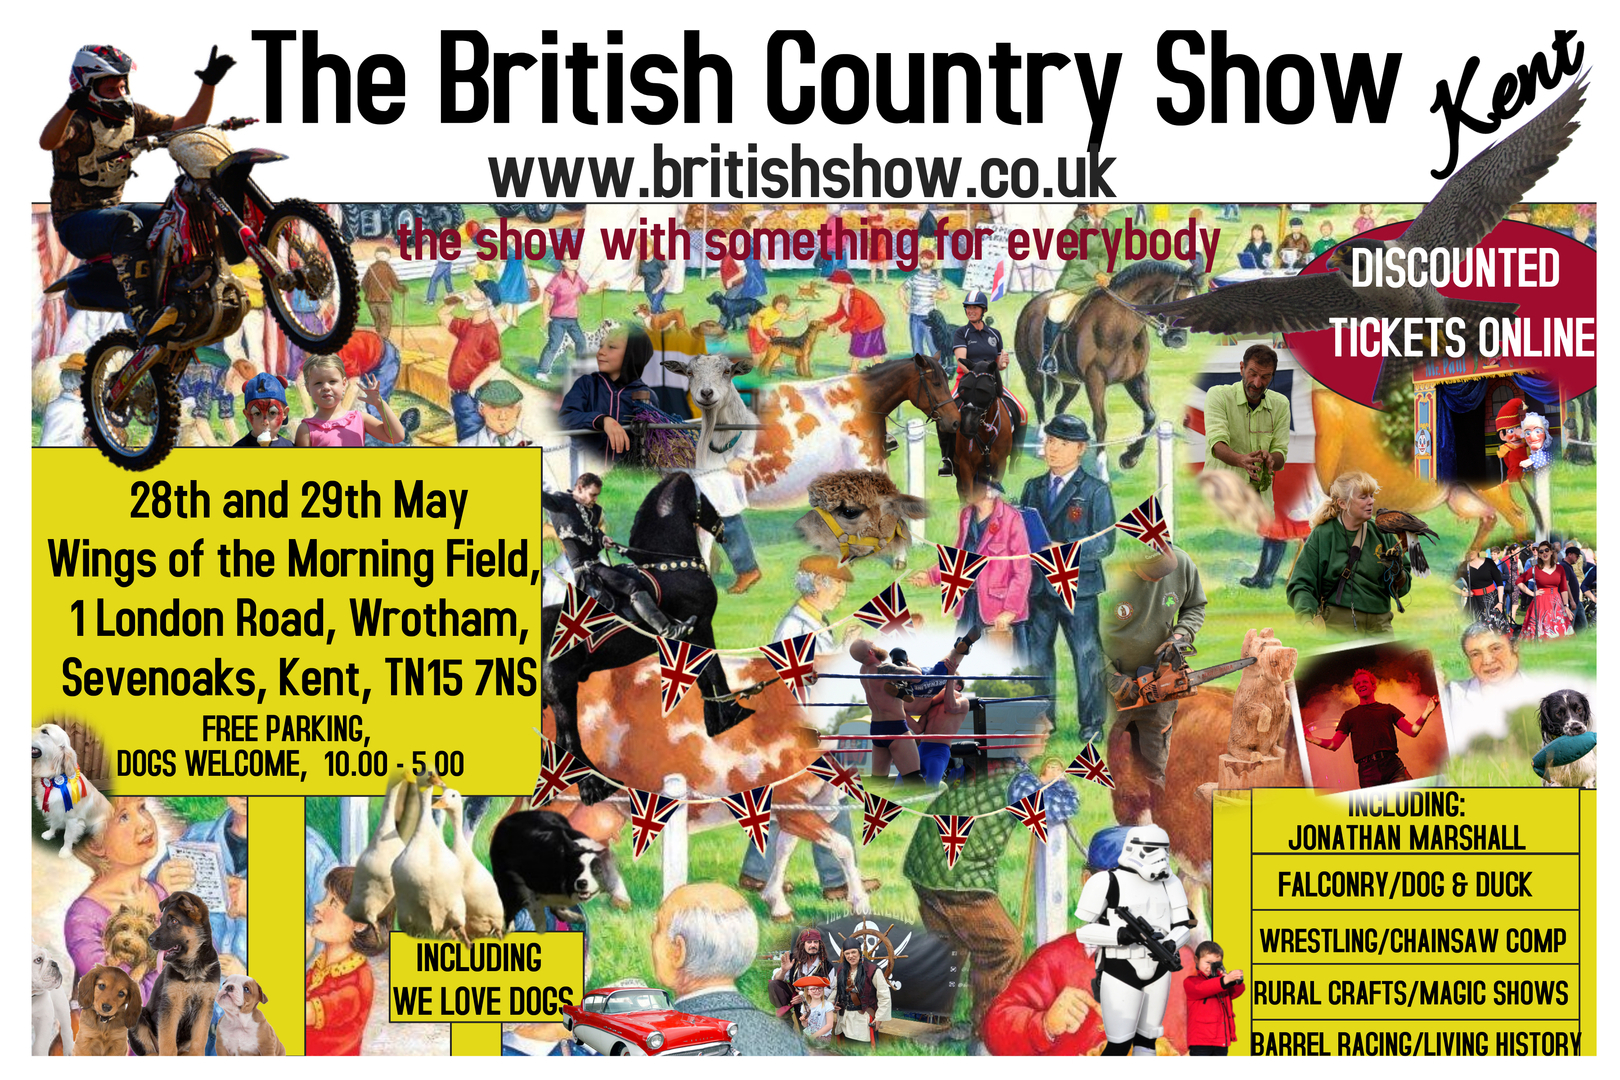 The British Country Show Kent, Sevenoaks, England, United Kingdom